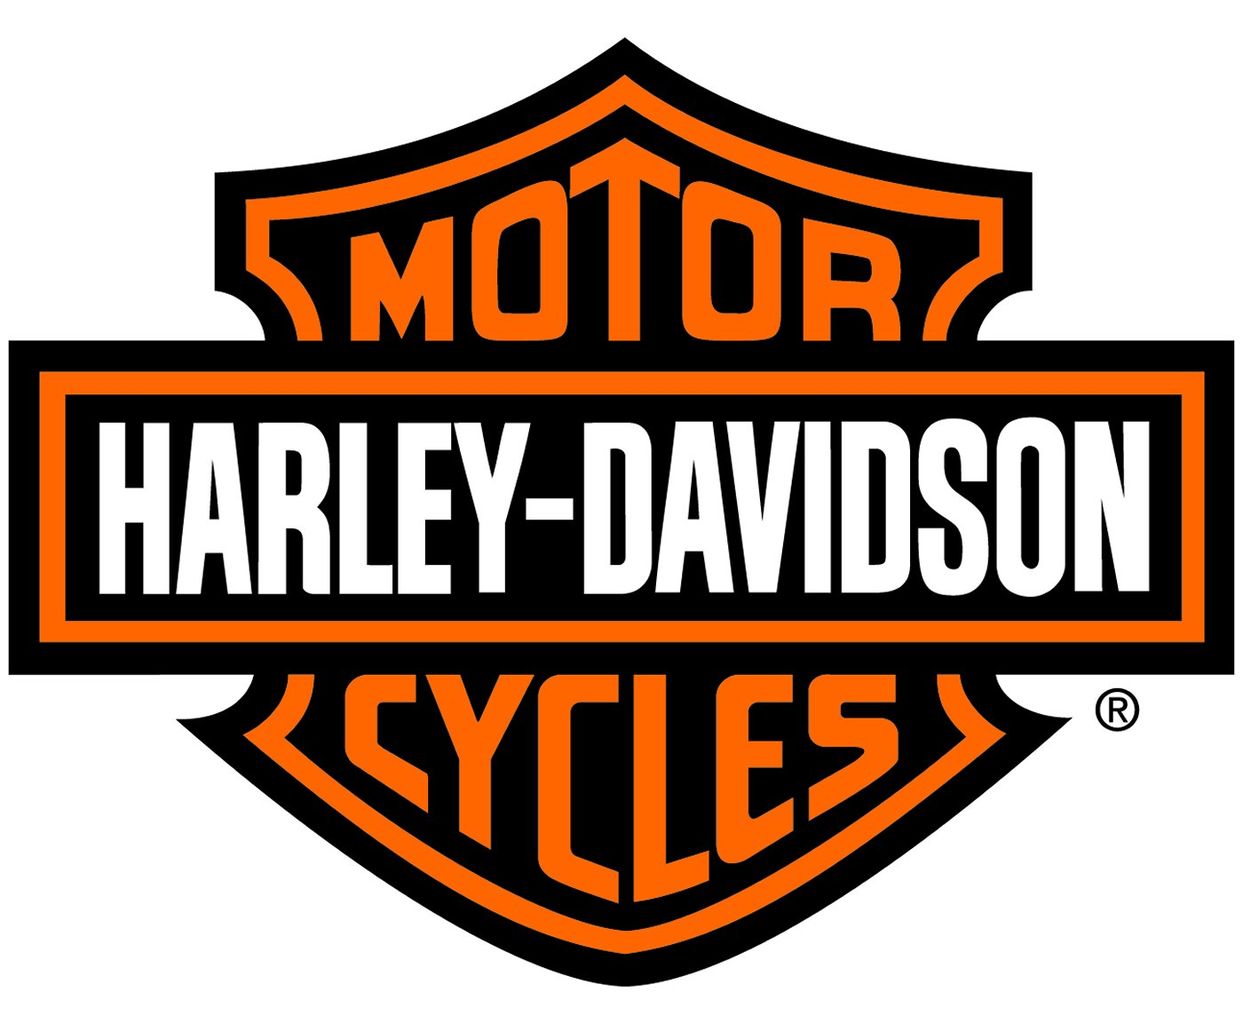 Thumbnail 4. Harley Davidson